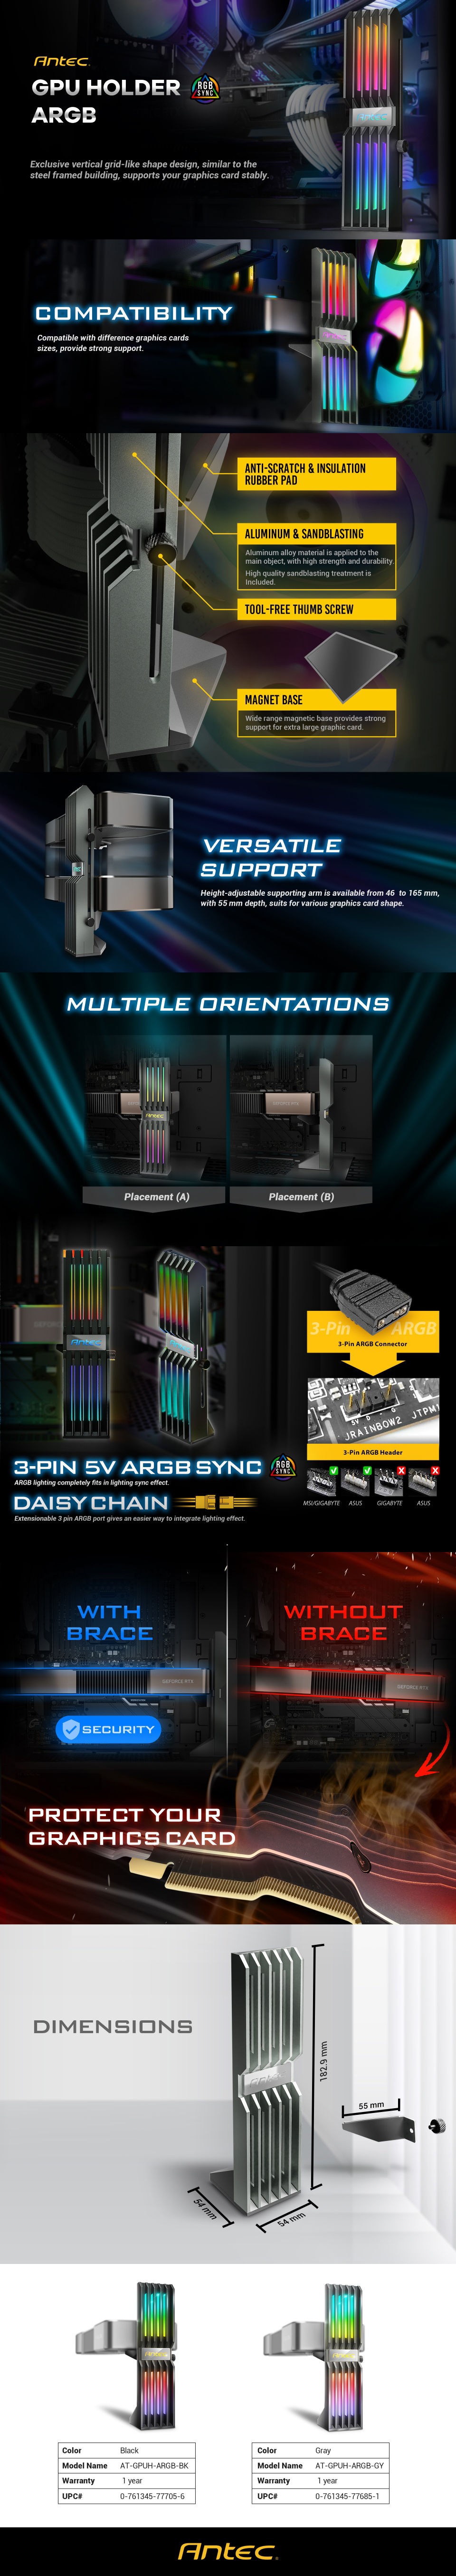 spec ANTEC RGB GPU SUPPORT BRACKET REVIEW